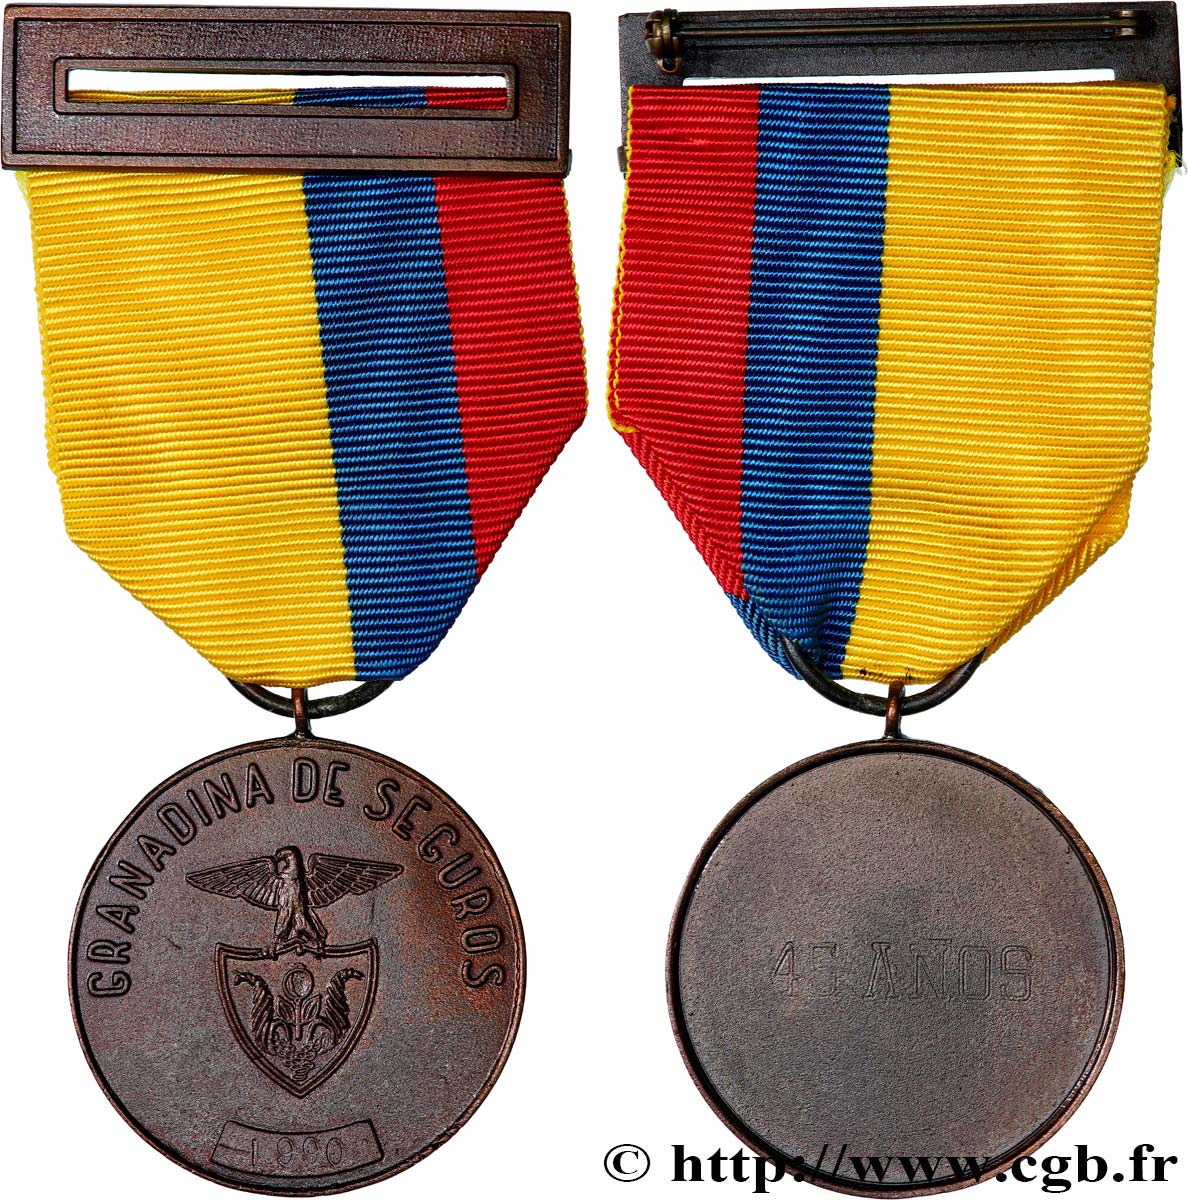 ASSURANCES Médaille, Granadina de seguros AU